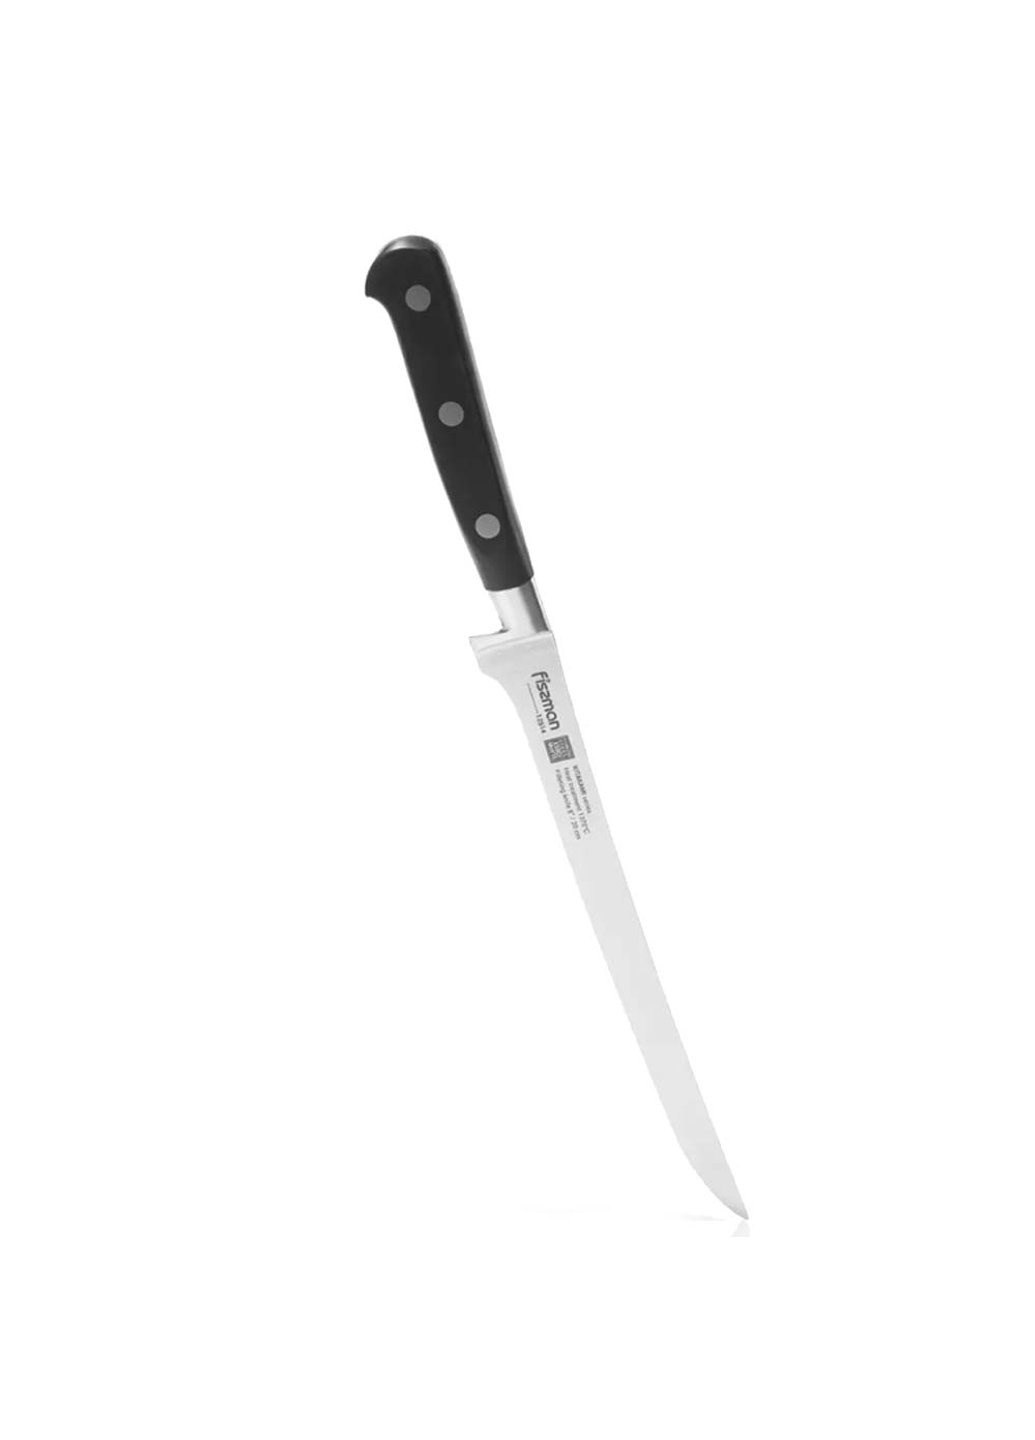 Нож филейный Kitakami FS-12514 20 см Fissman (254782618)